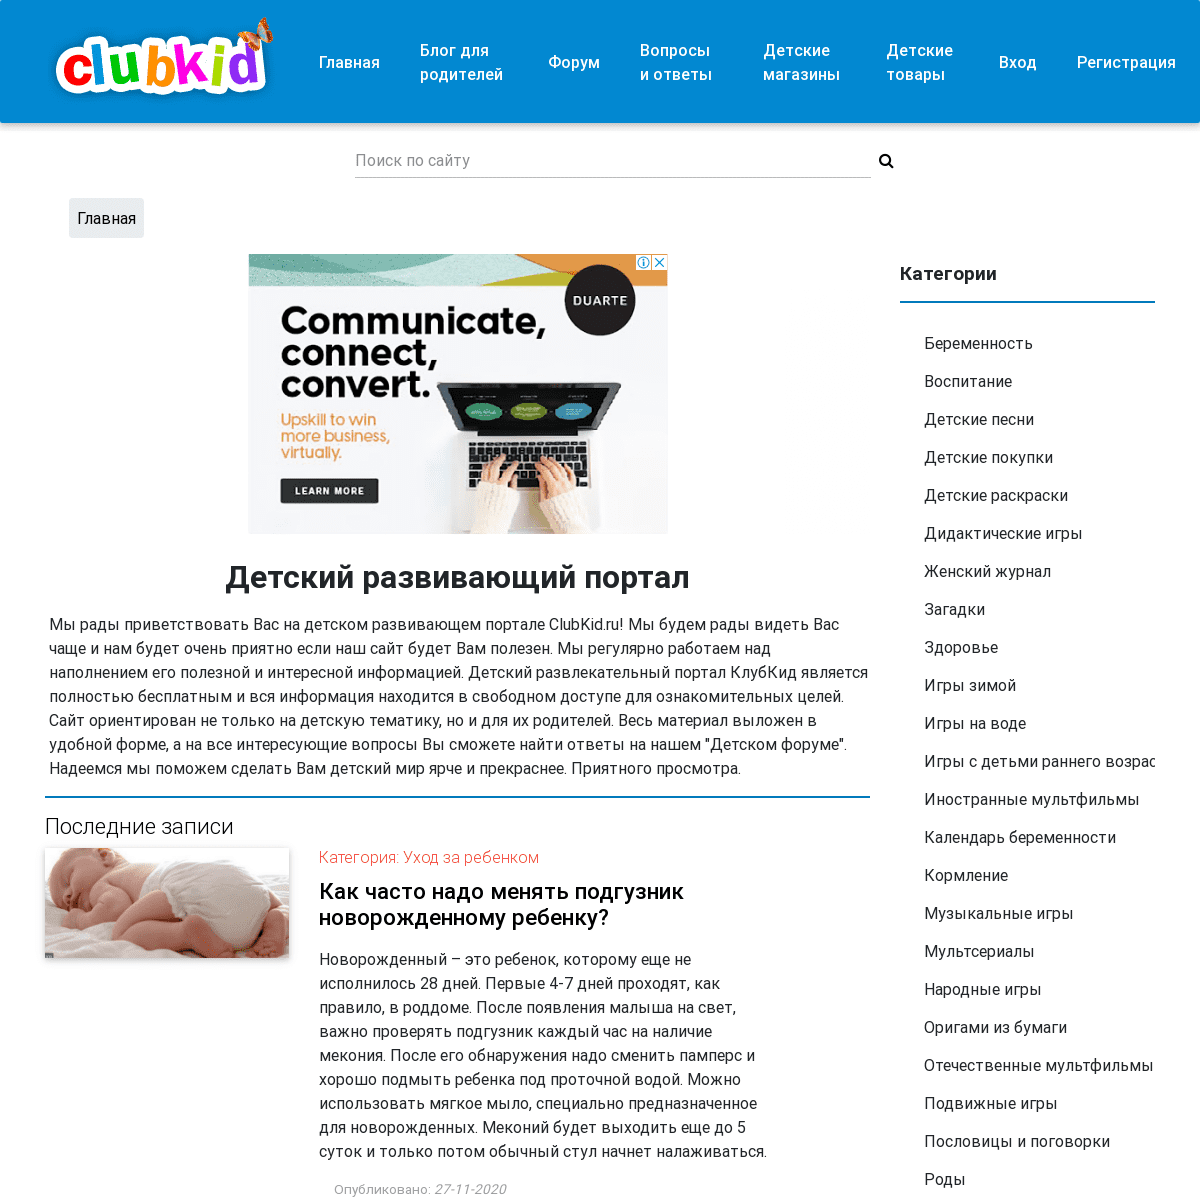 A complete backup of clubkid.ru